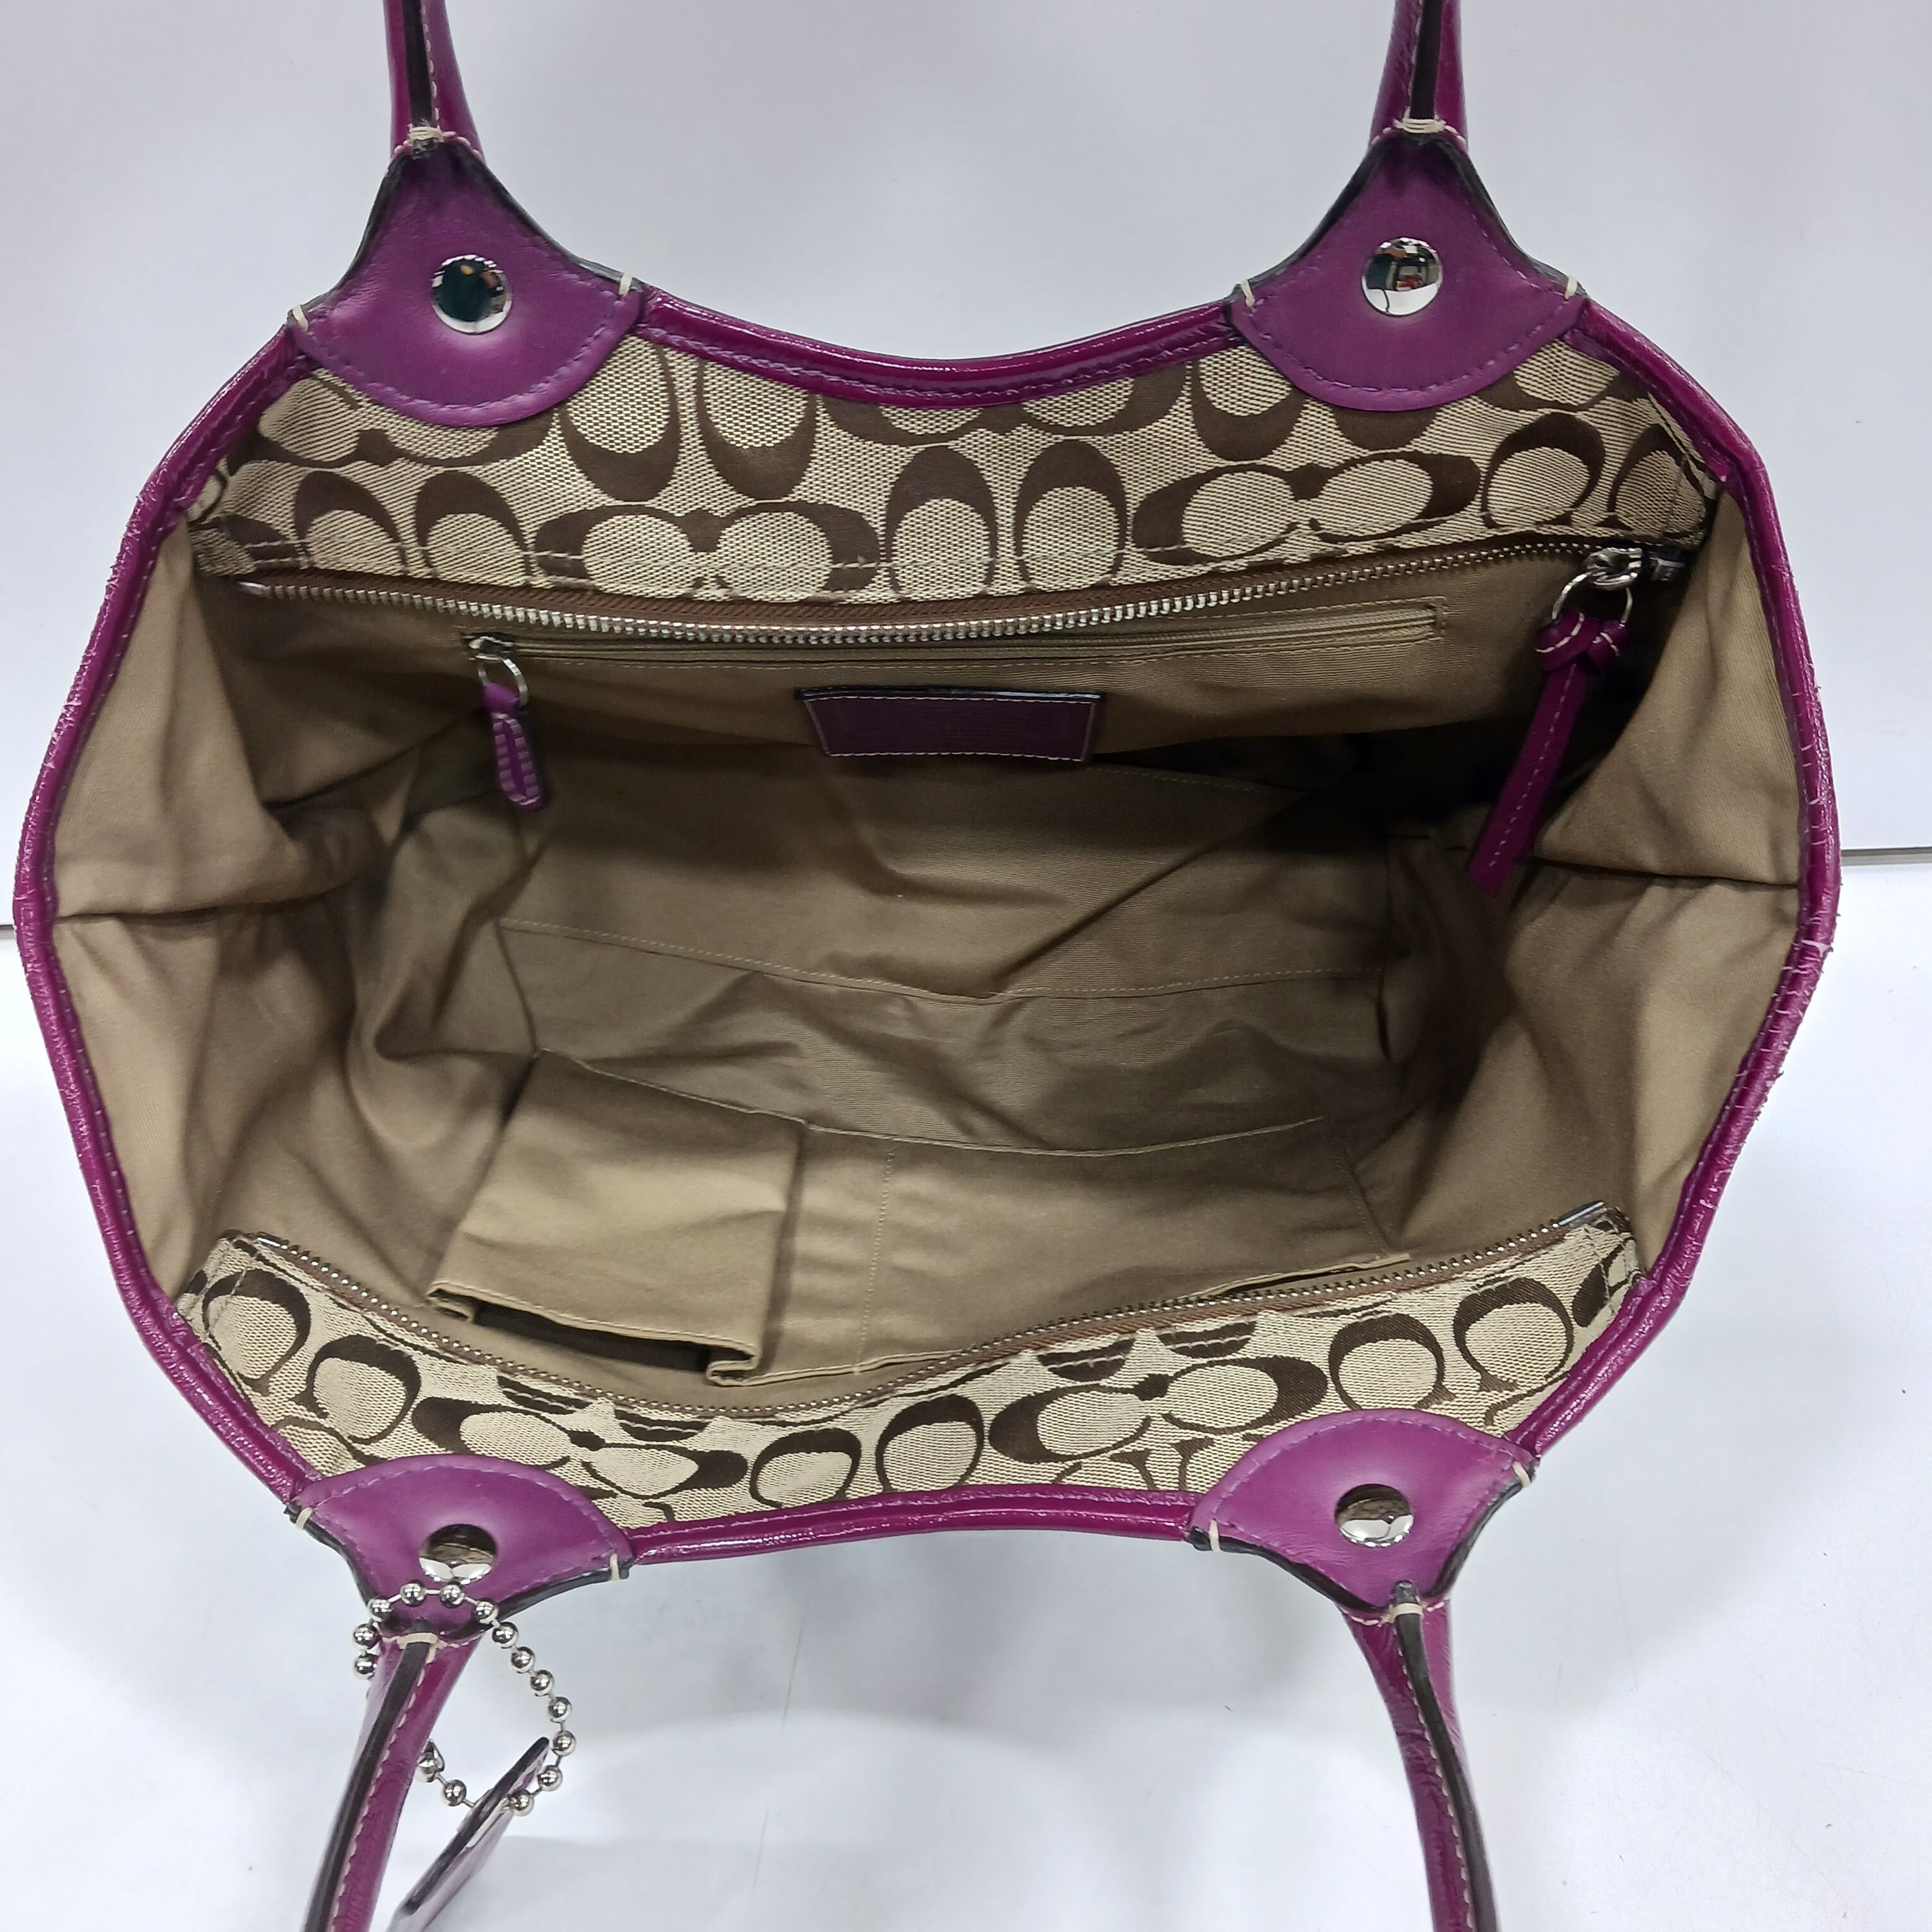 Coach Purse purple accent - Women's handbags